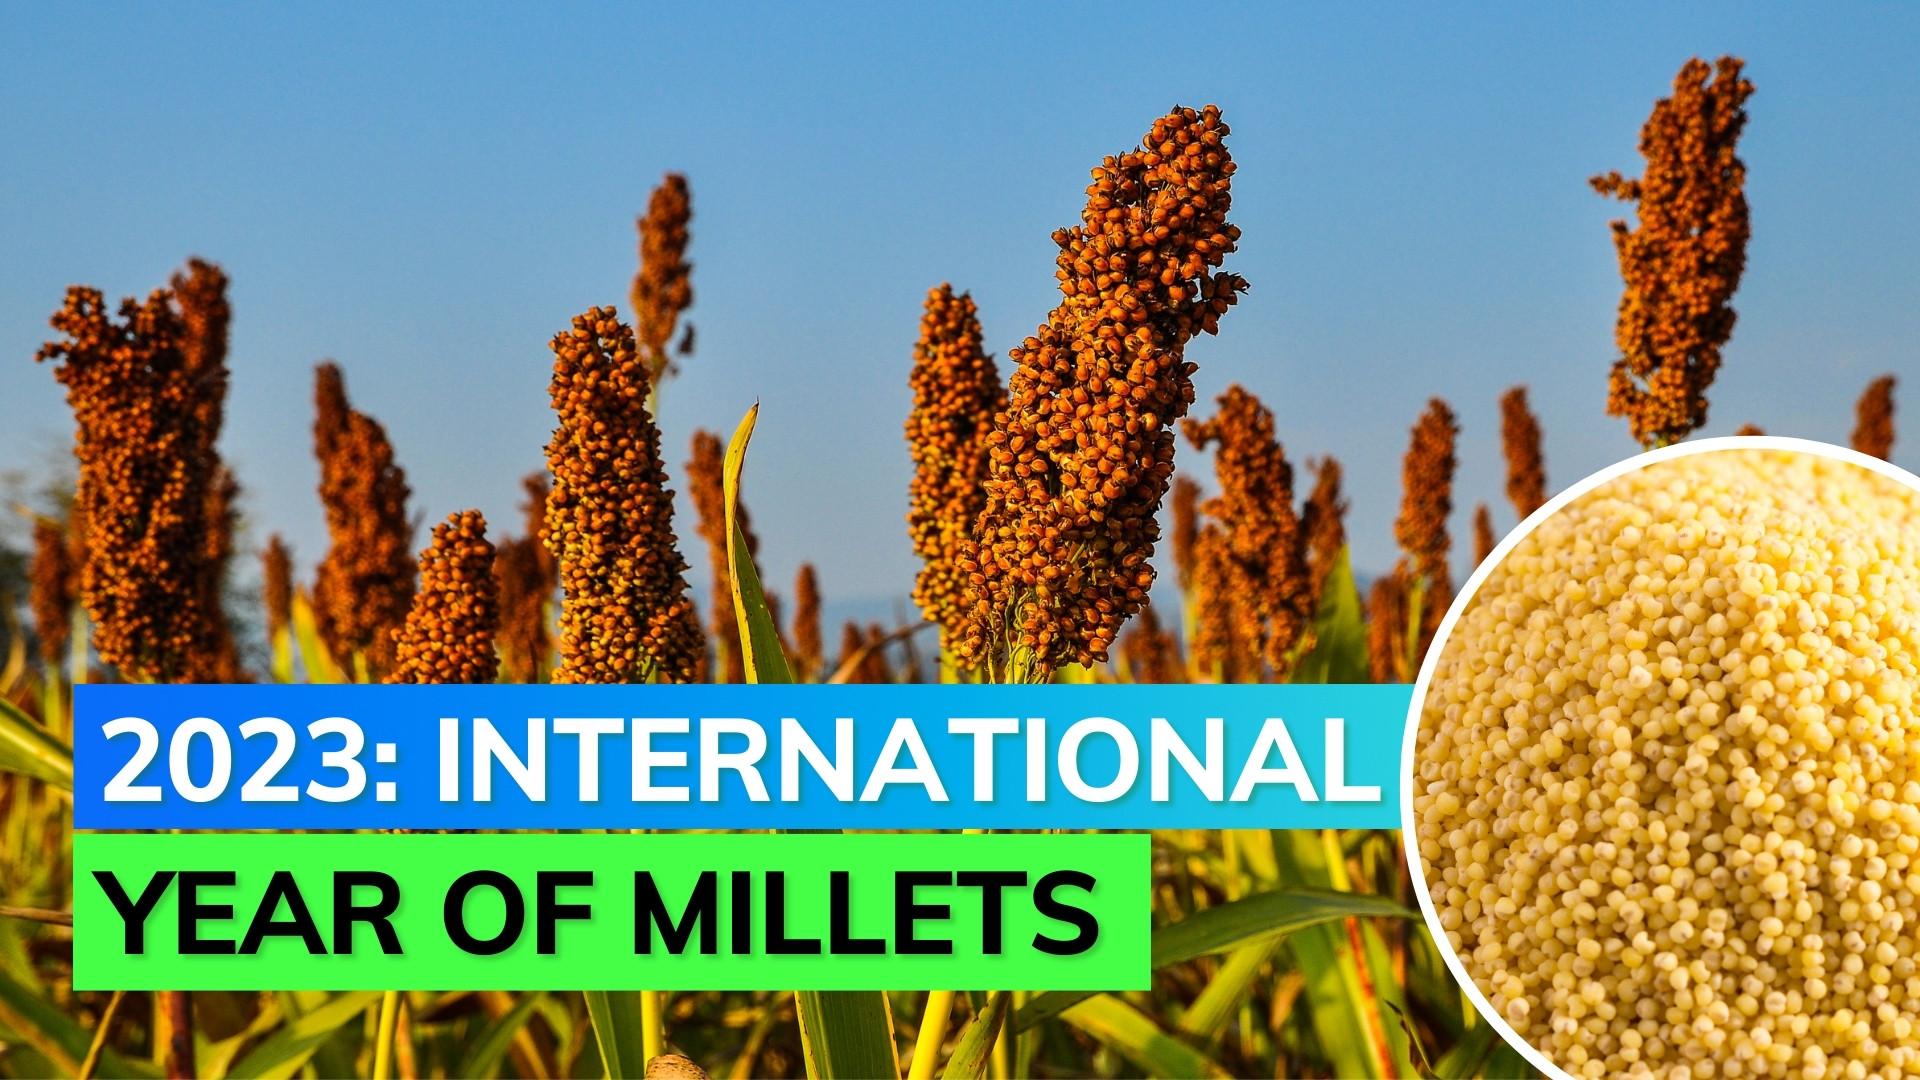 Bhubaneswar to Host India’s 1st International Millet Convention on Nov 9-10